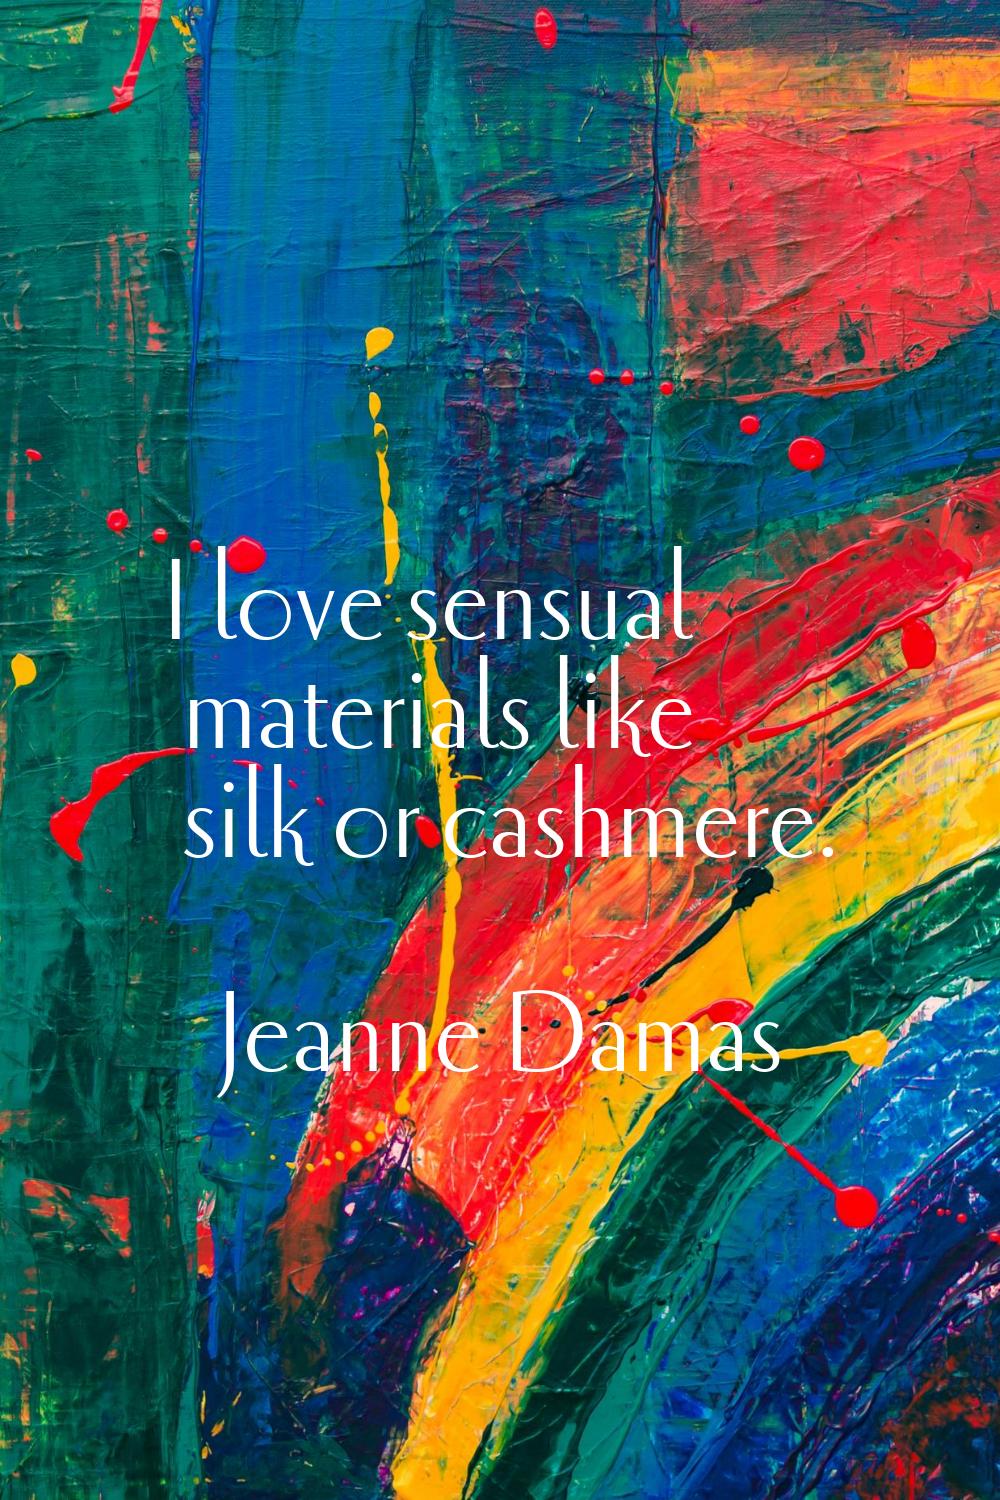 I love sensual materials like silk or cashmere.